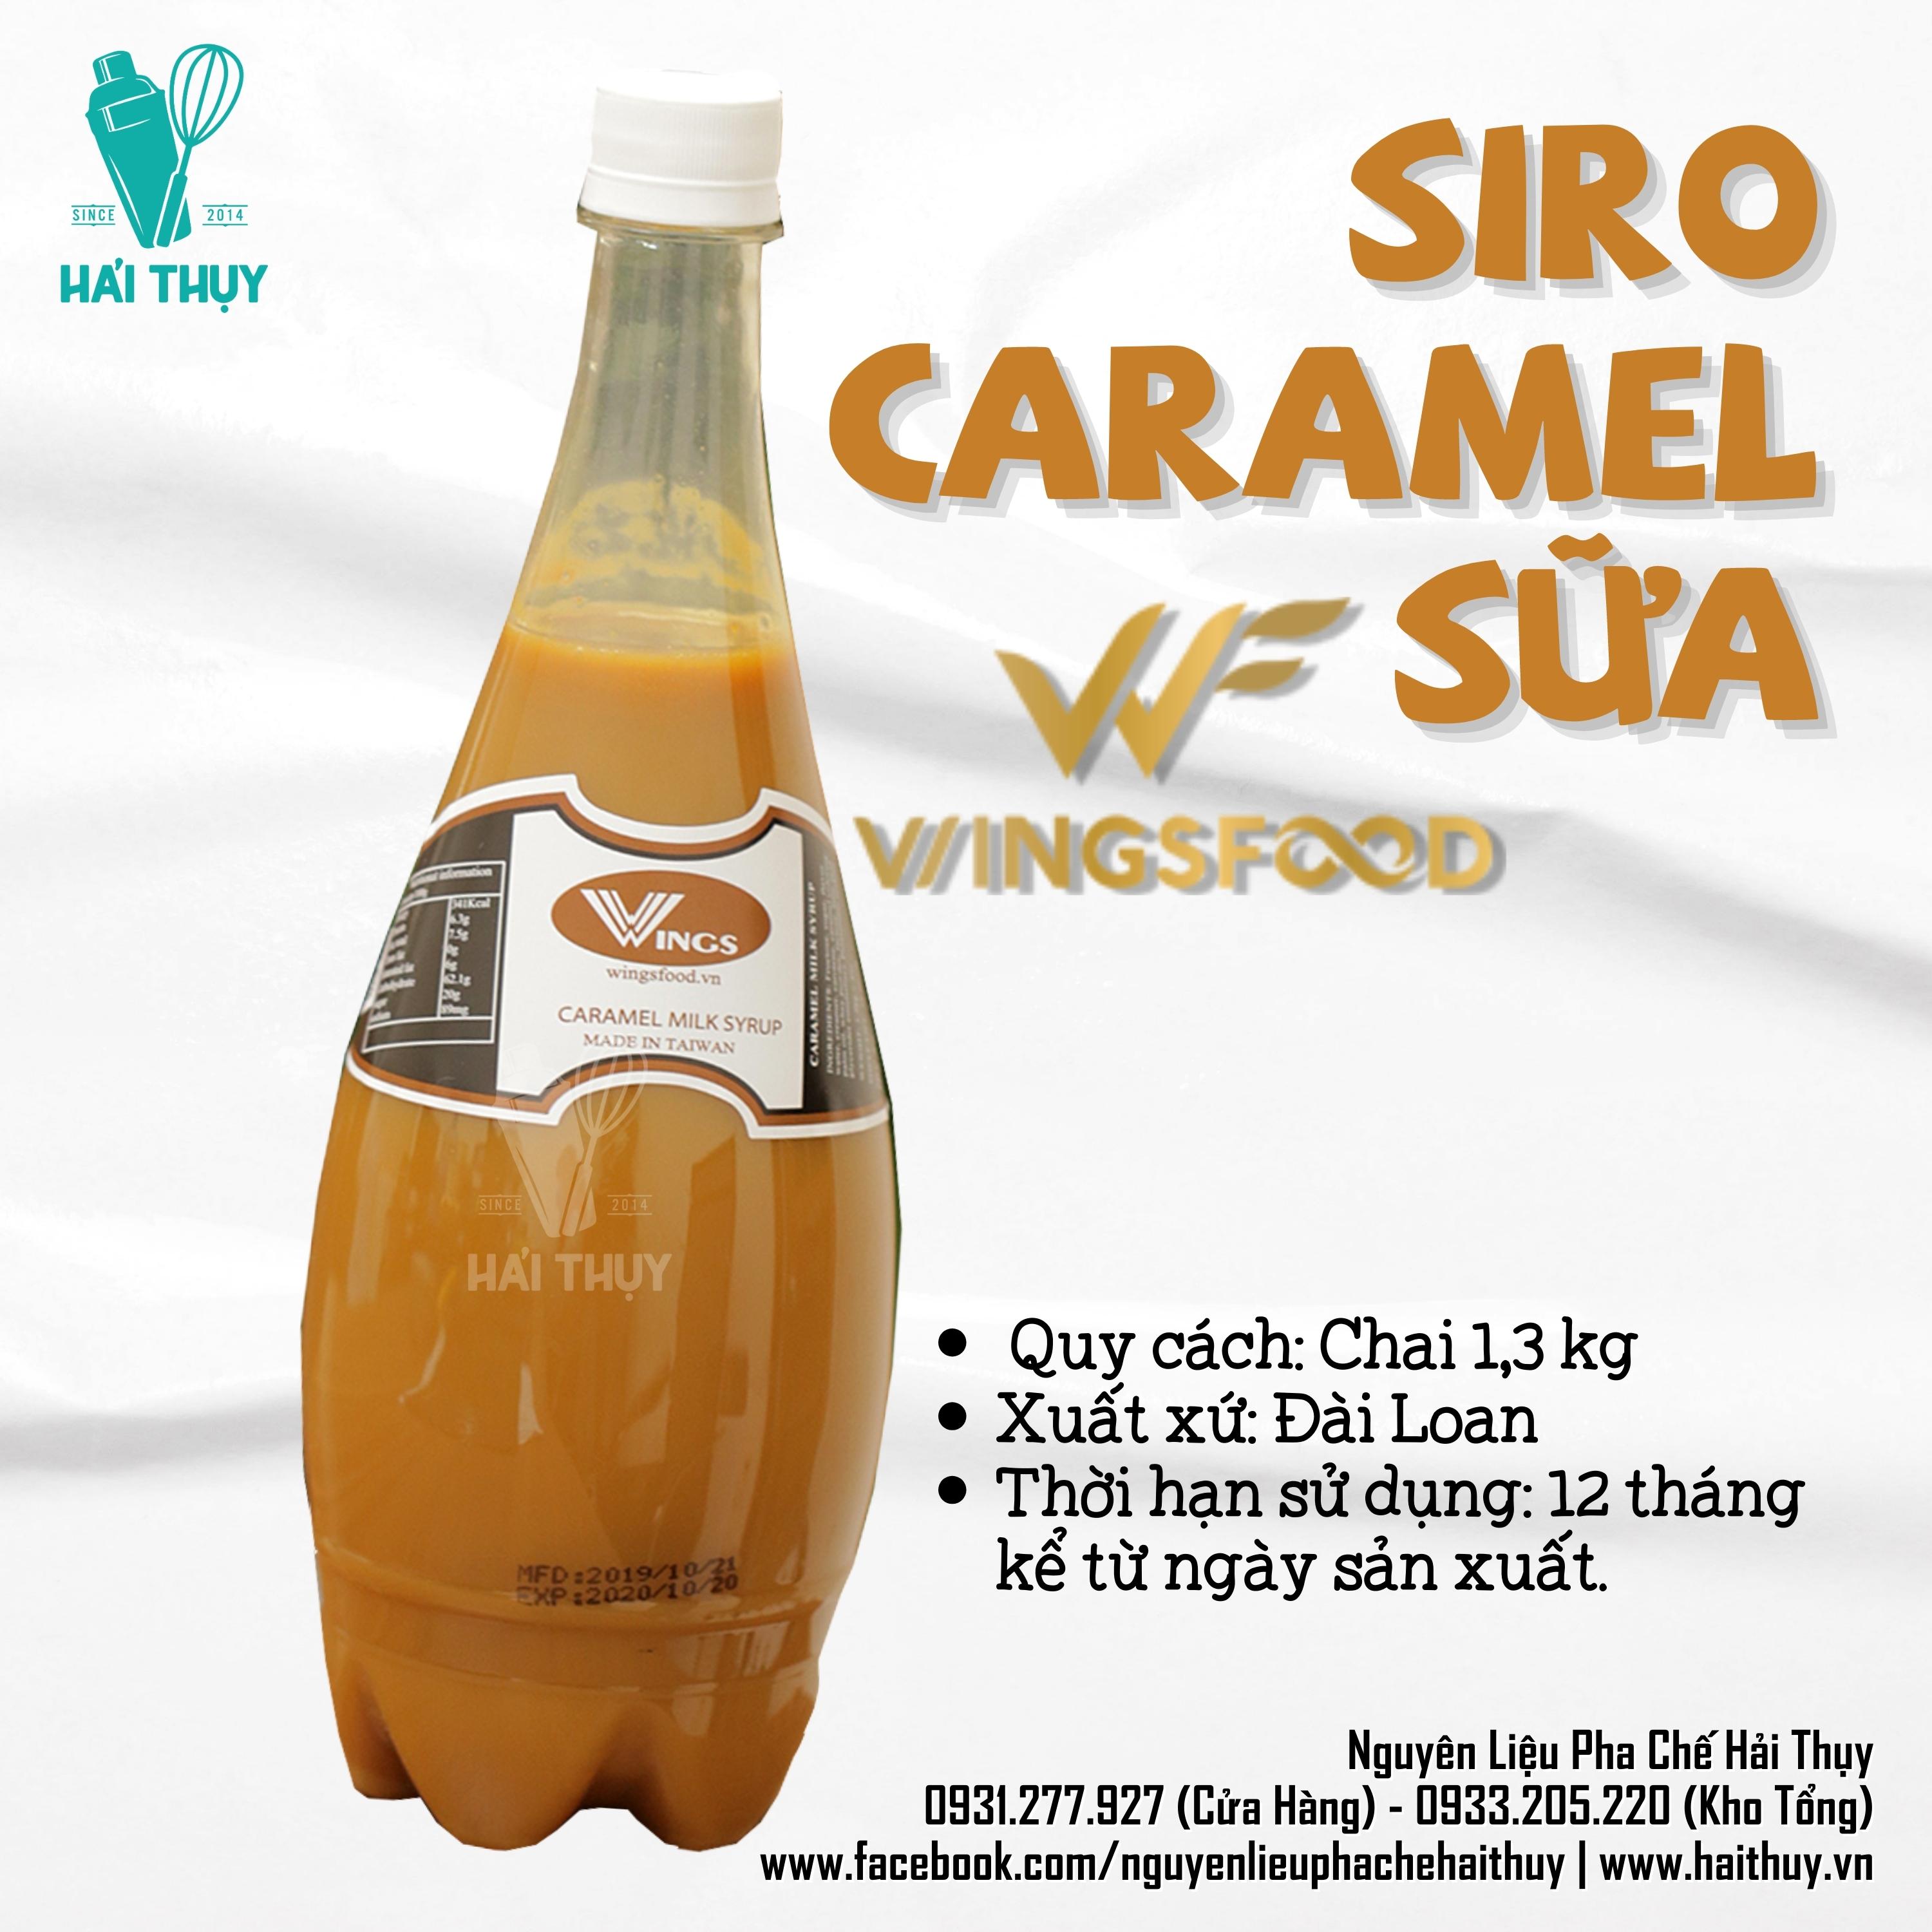 Syrup Caramel Sữa Wing 1.3kg